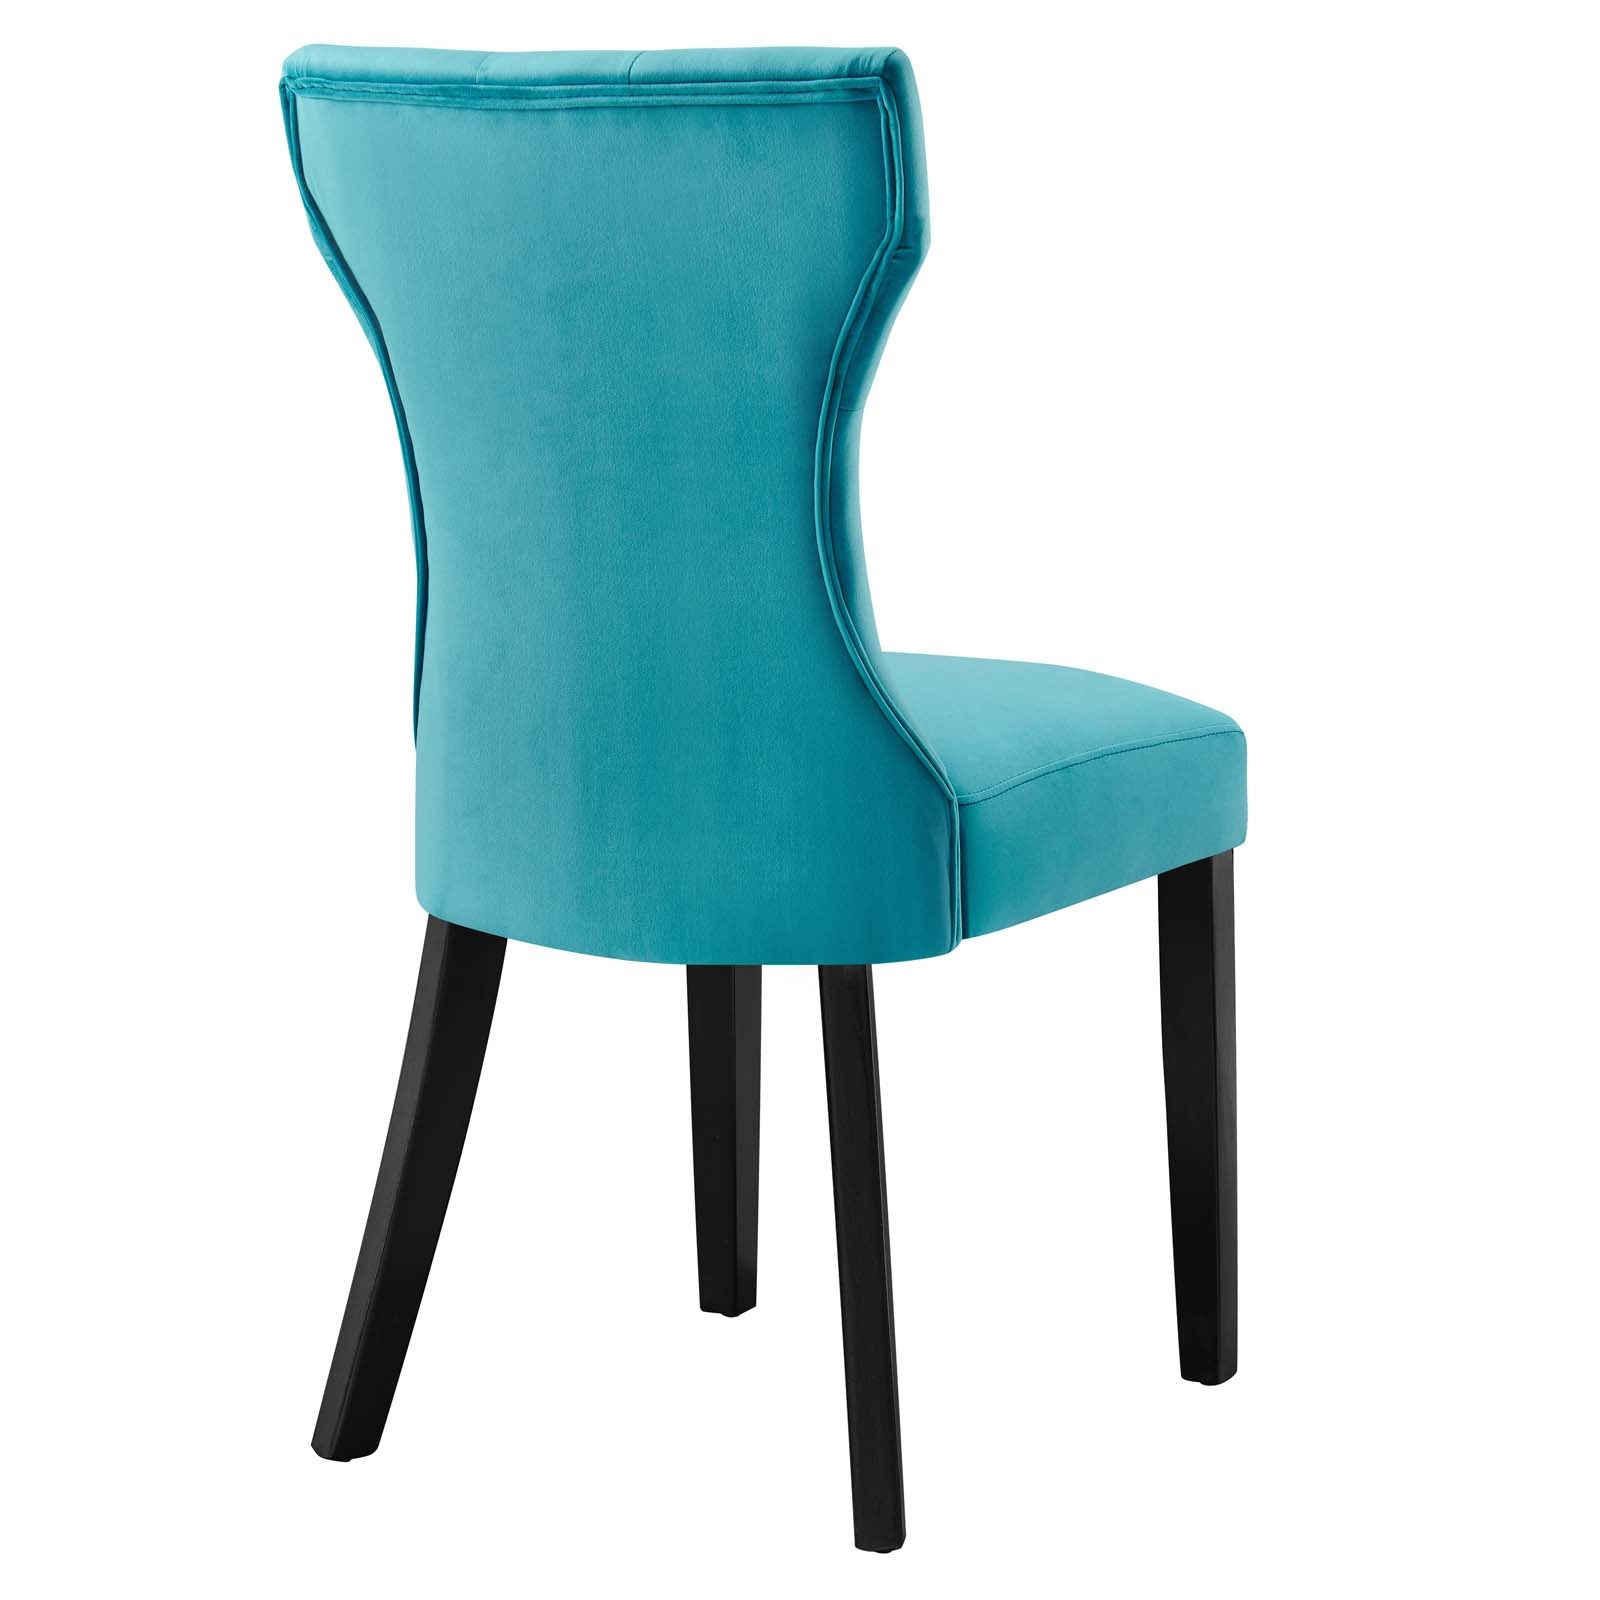 Silhouette Performance Velvet Dining Chairs - Set of 2 - East Shore Modern Home Furnishings